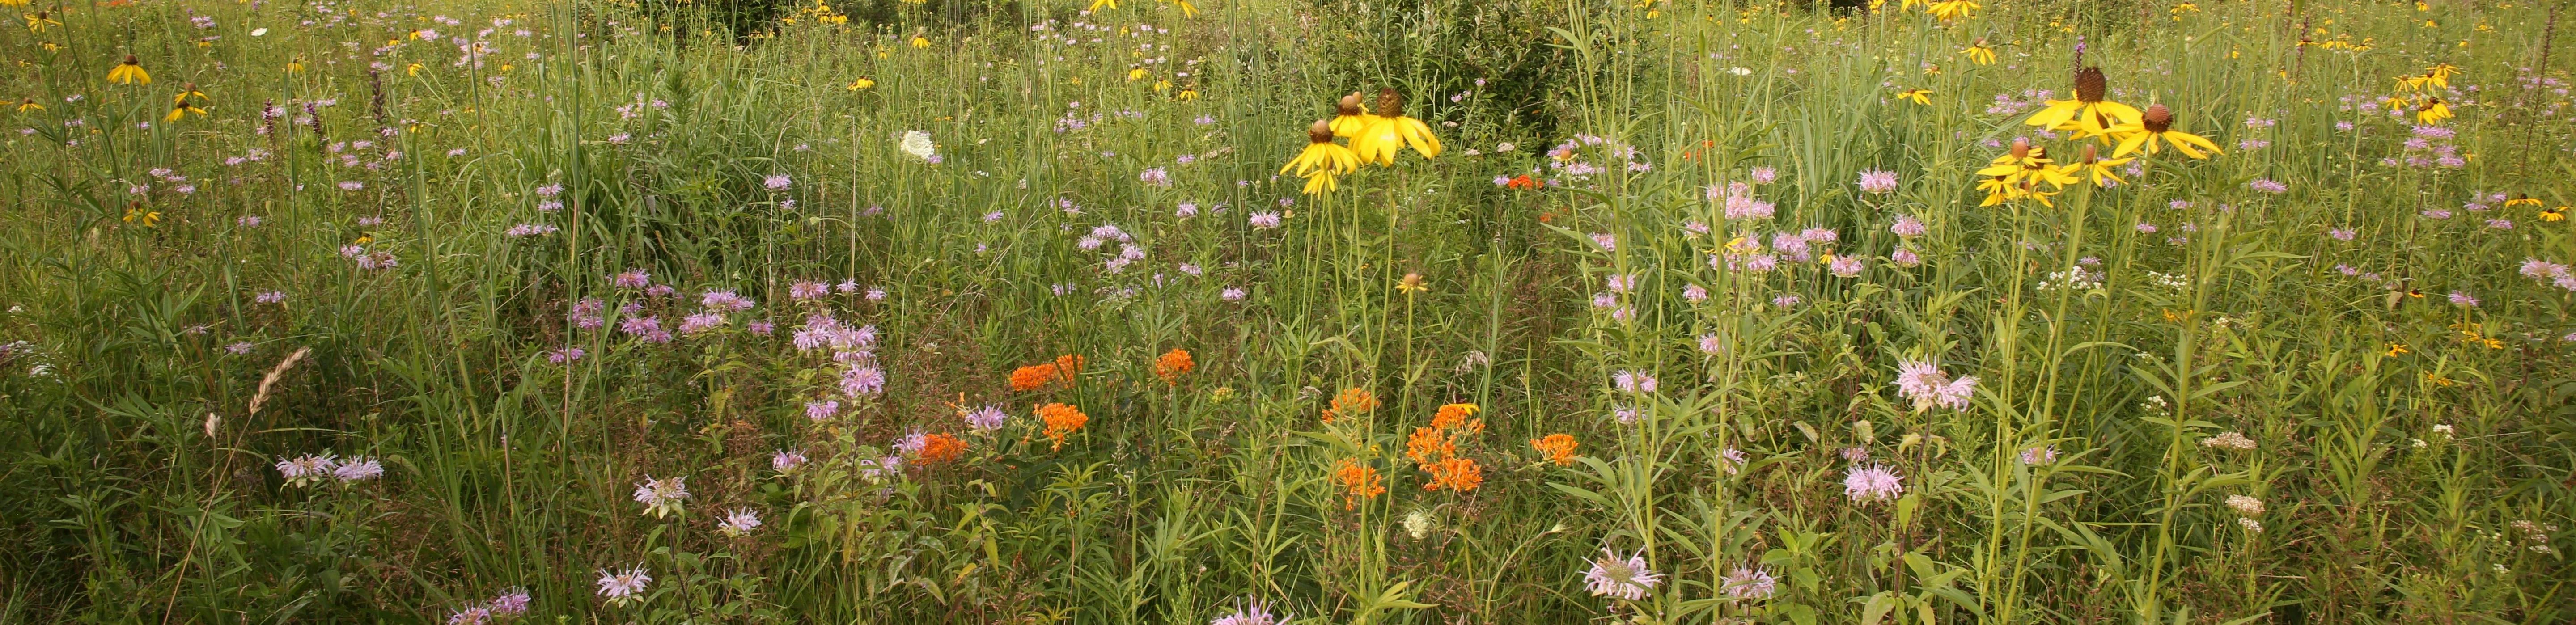 Prairie Scene including flowers